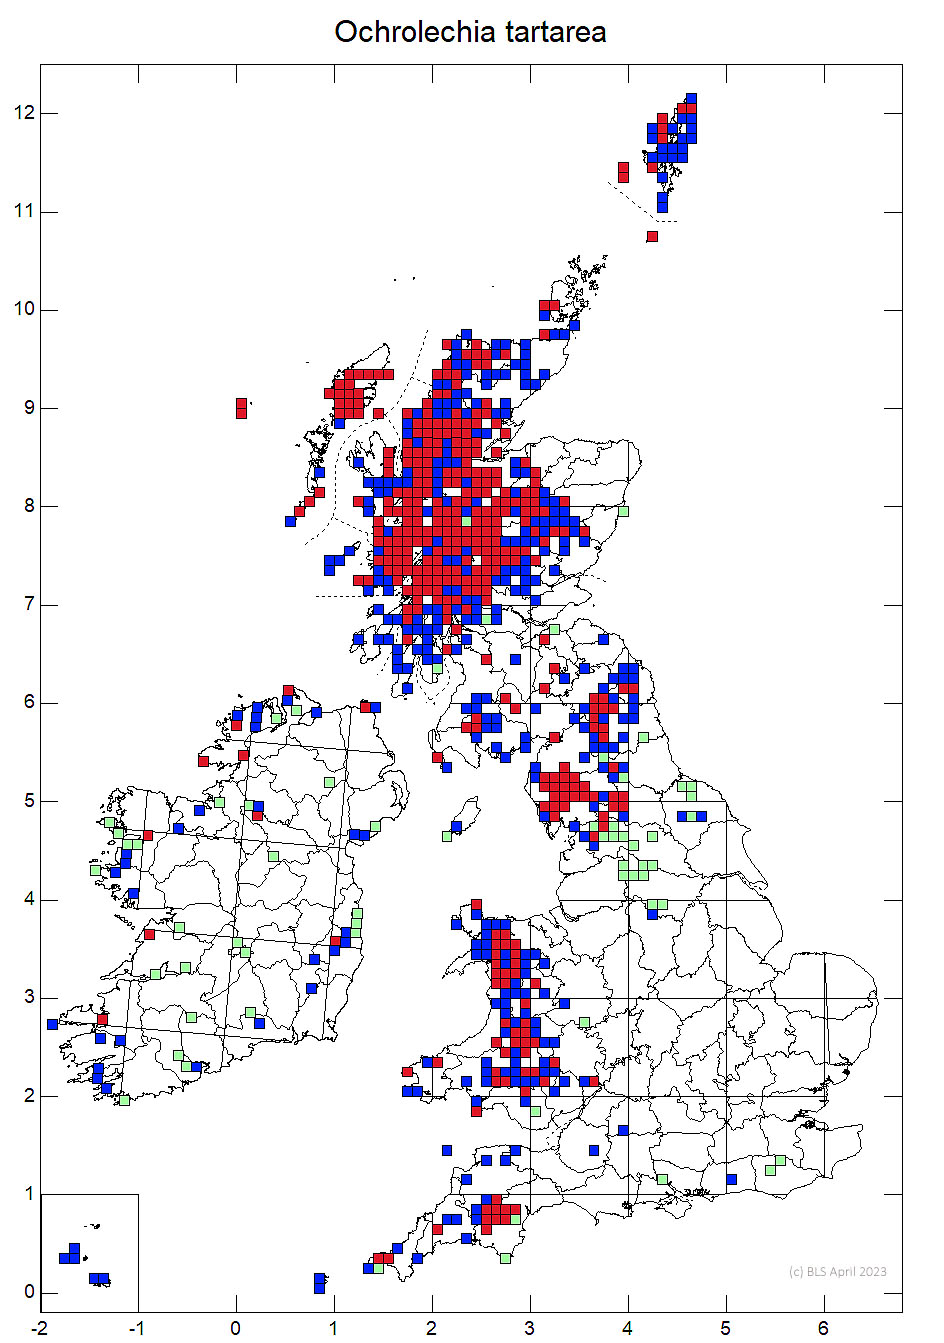 Ochrolechia tartarea 10km sq distribution map